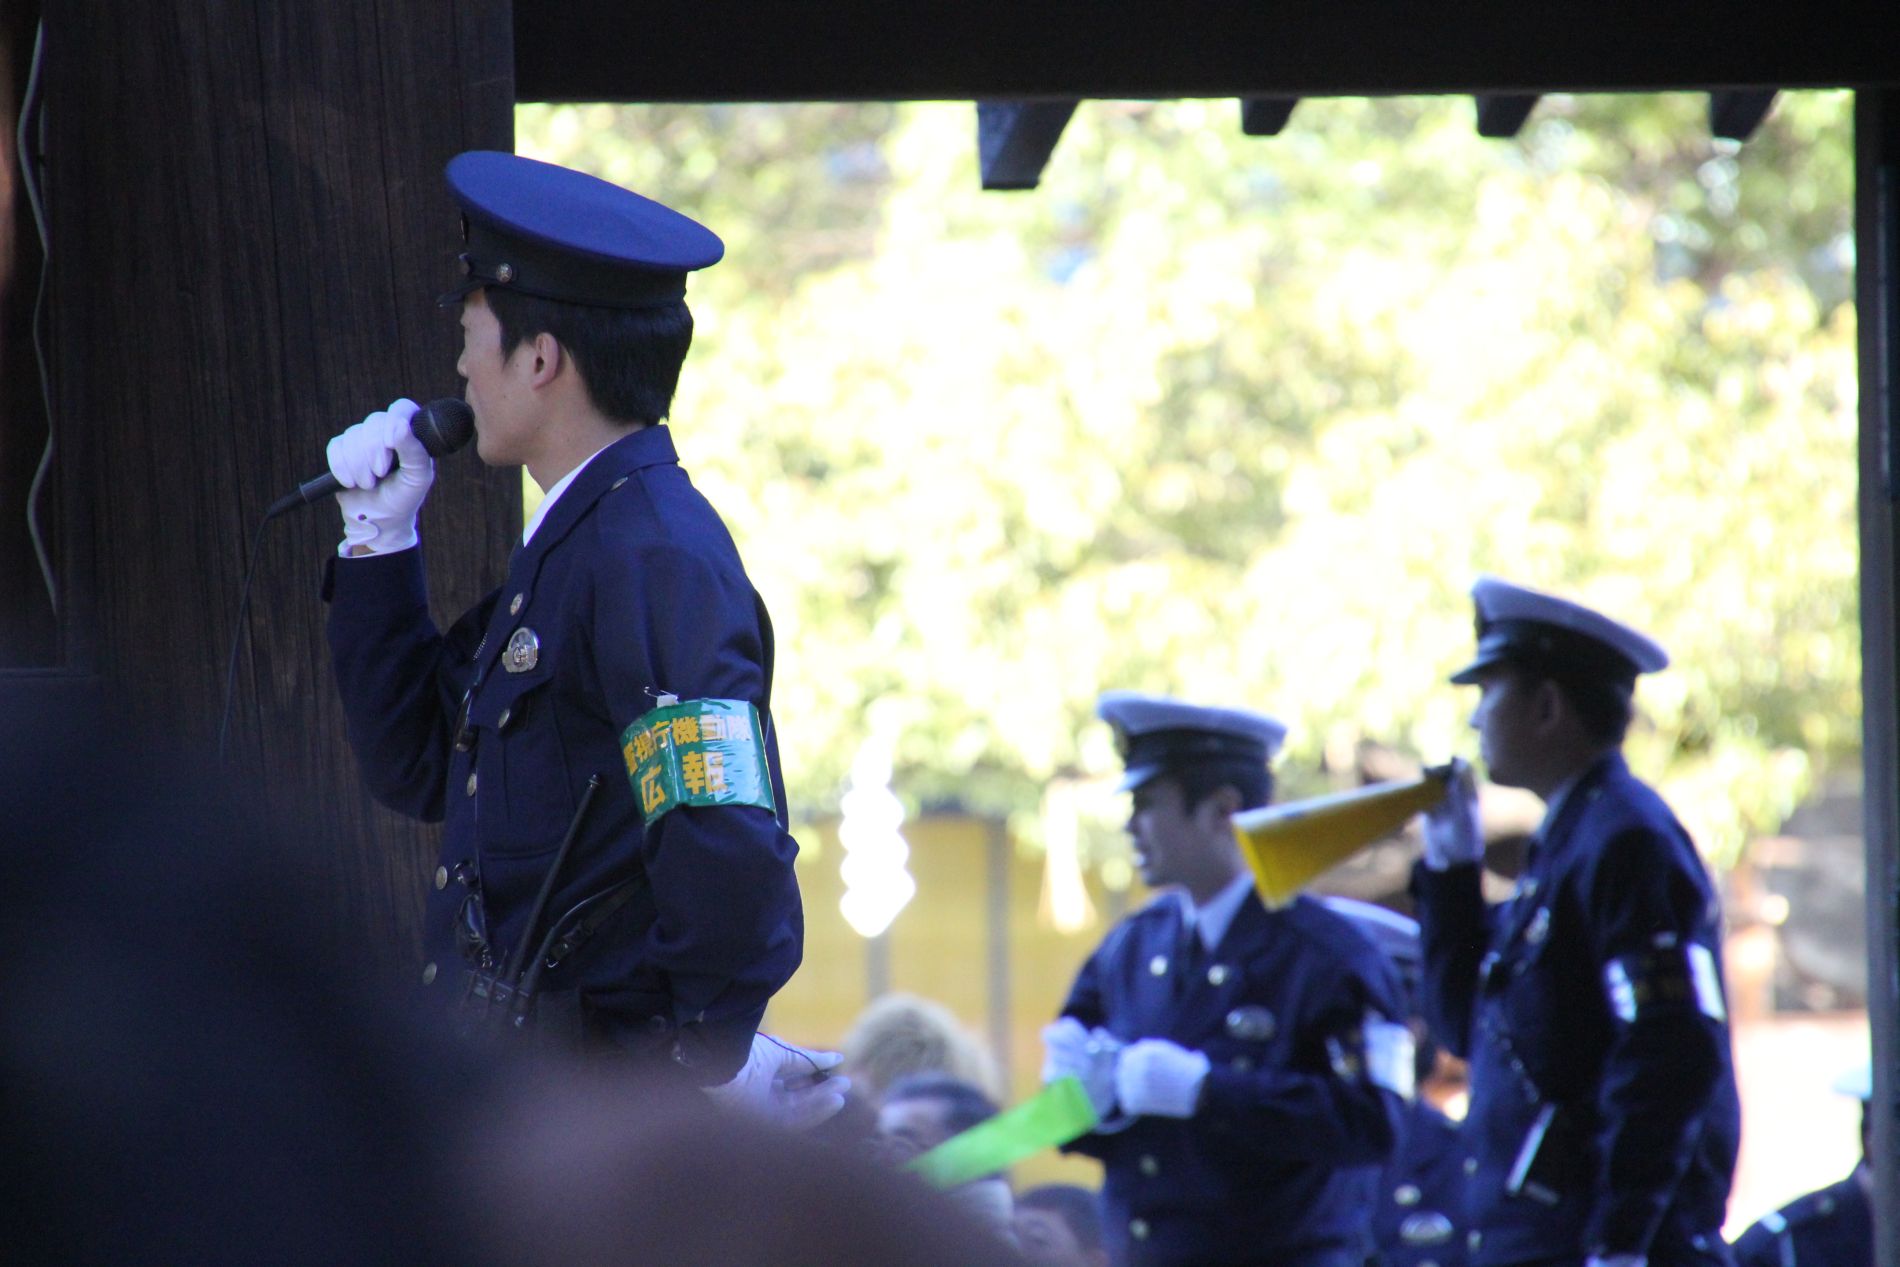 Japanese police manage the Meiji Jingu Shrine's many visitors.